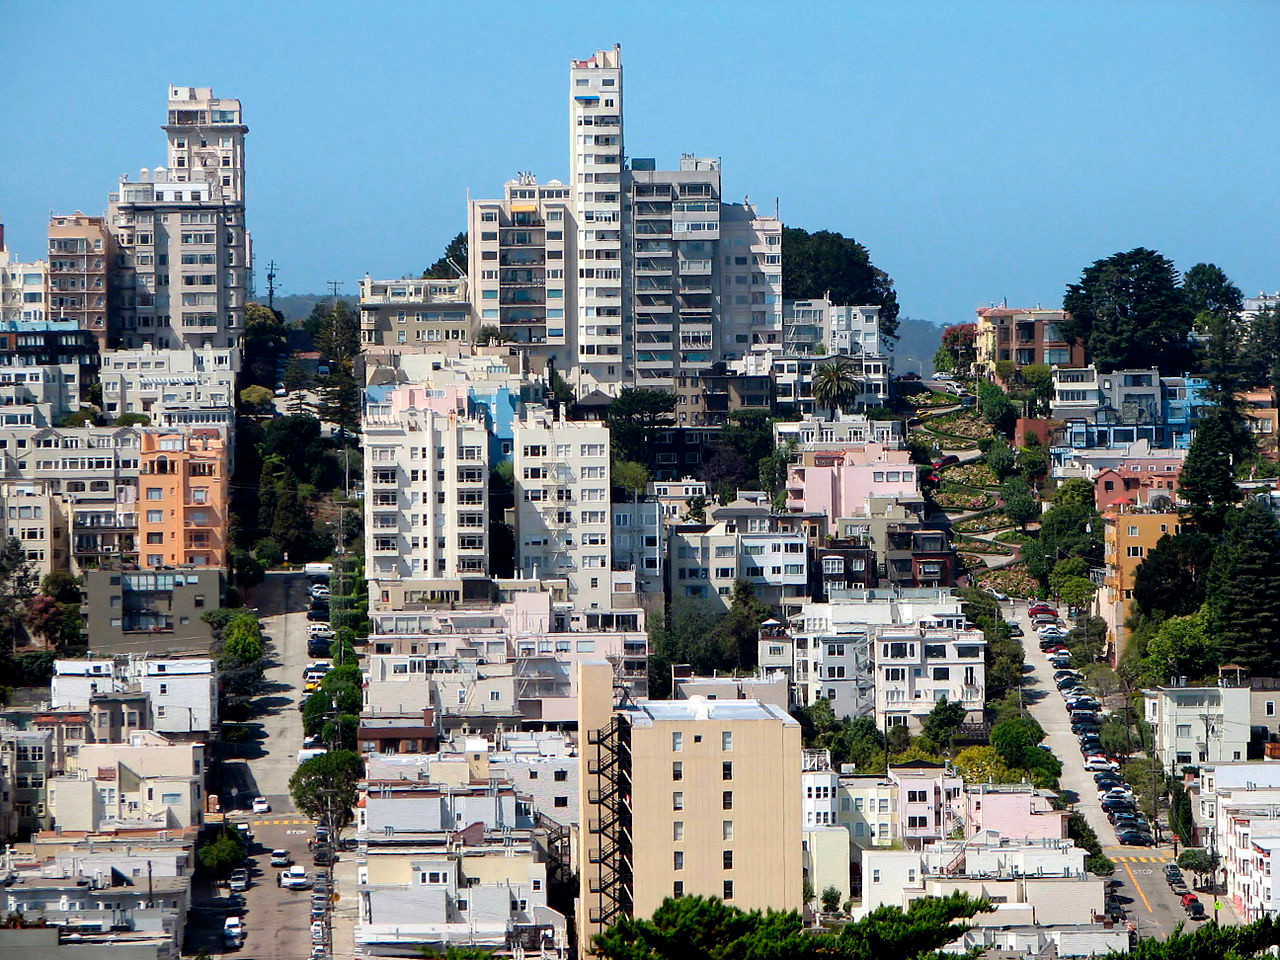 Russian Hill, seen from Telegraph Hill, San Francisco, California, U.S.